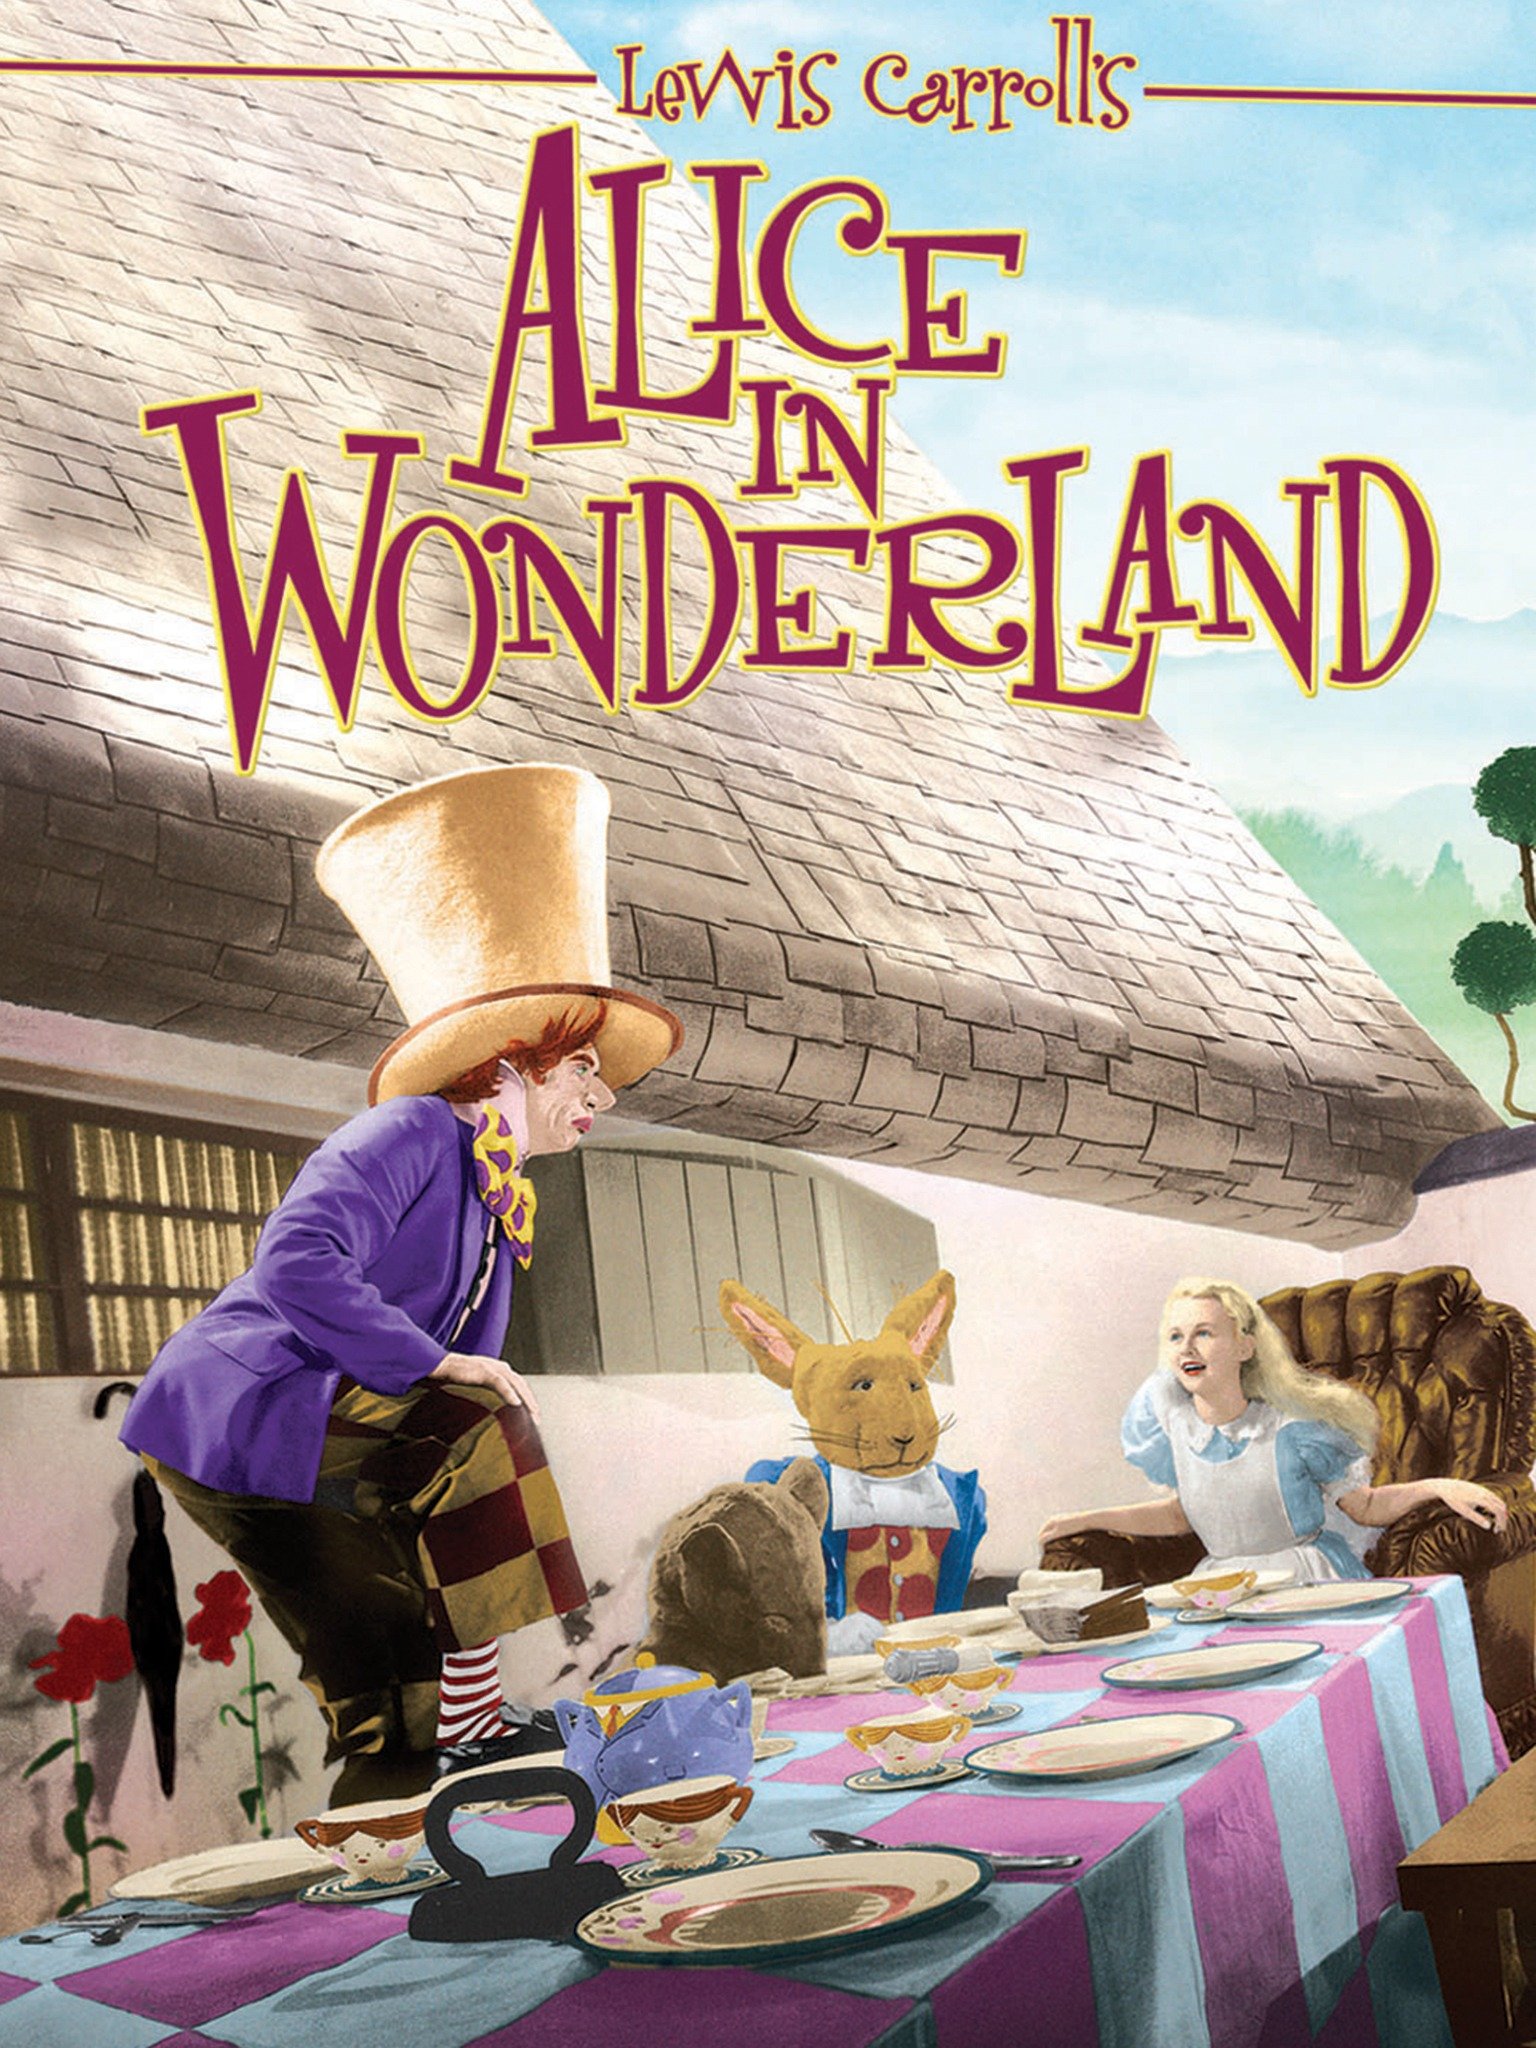 movie review of alice in wonderland